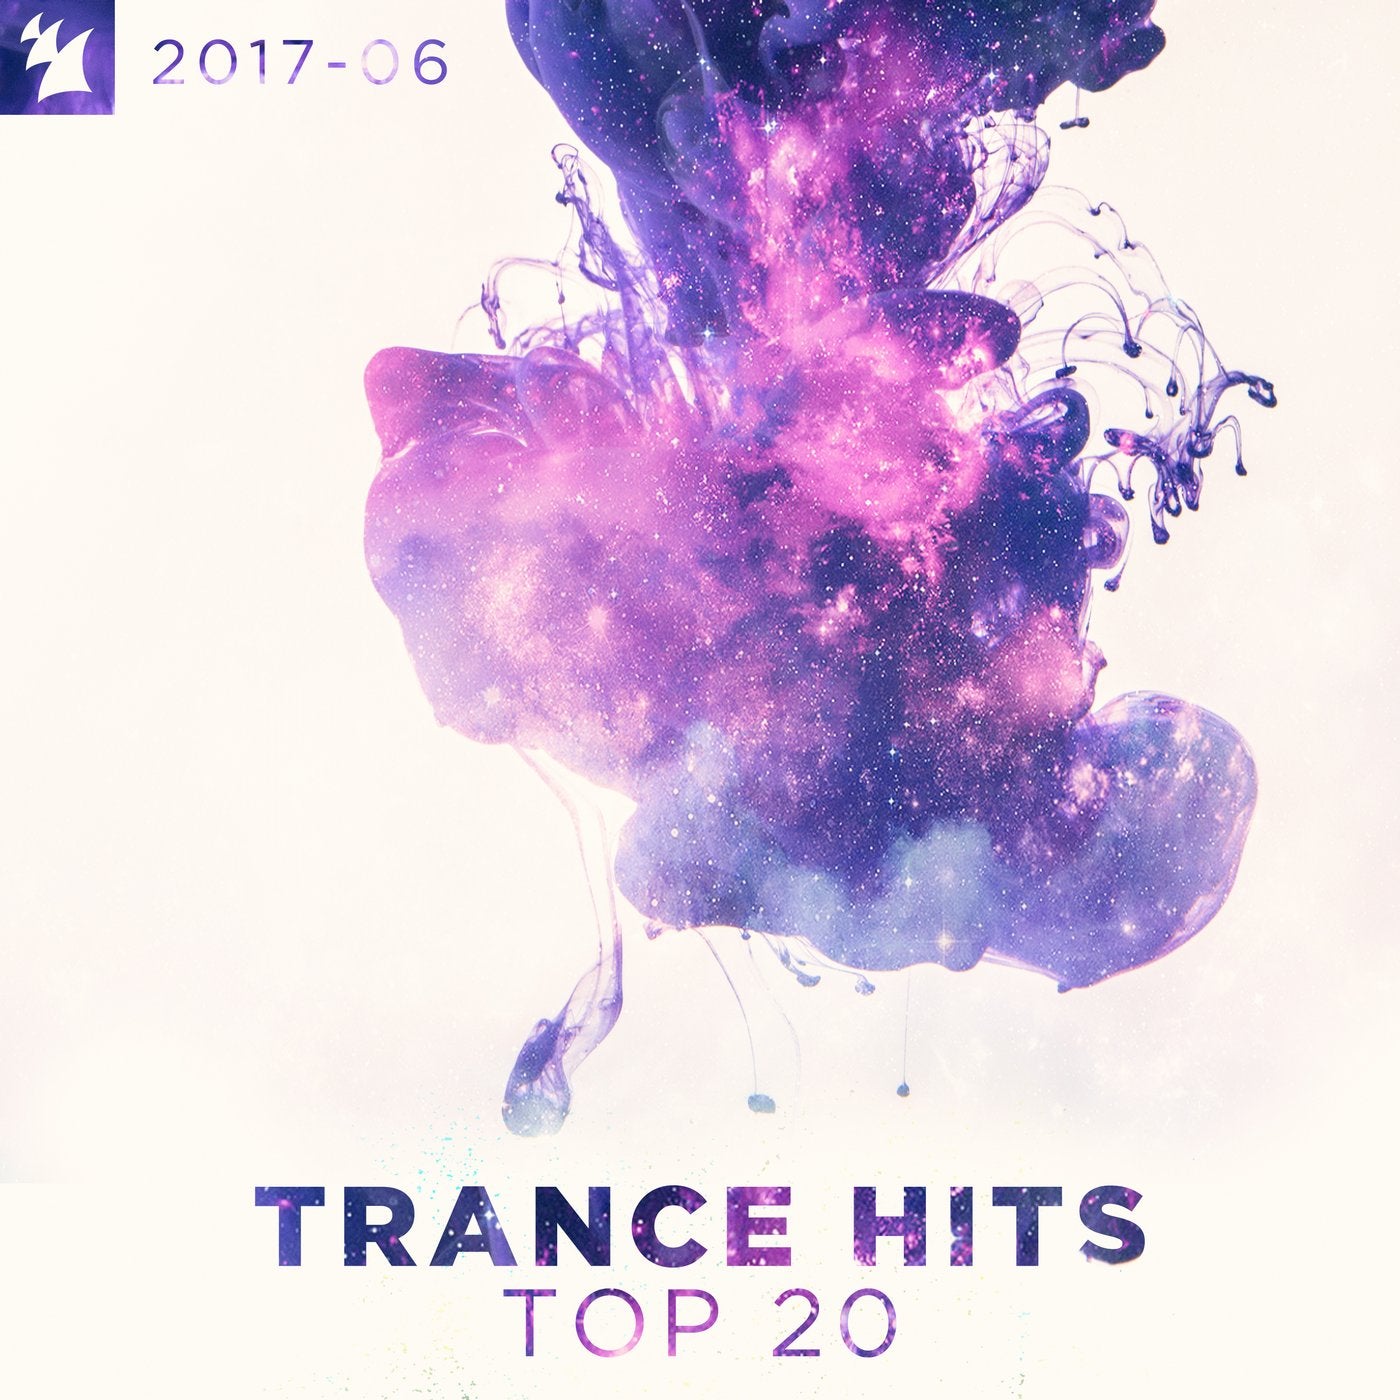 Trance Hits. Leroy Moreno album. Trance Hits Top 20 - 2017-02. Mark Sherry - gravitational Waves (Systembreaker Remix).